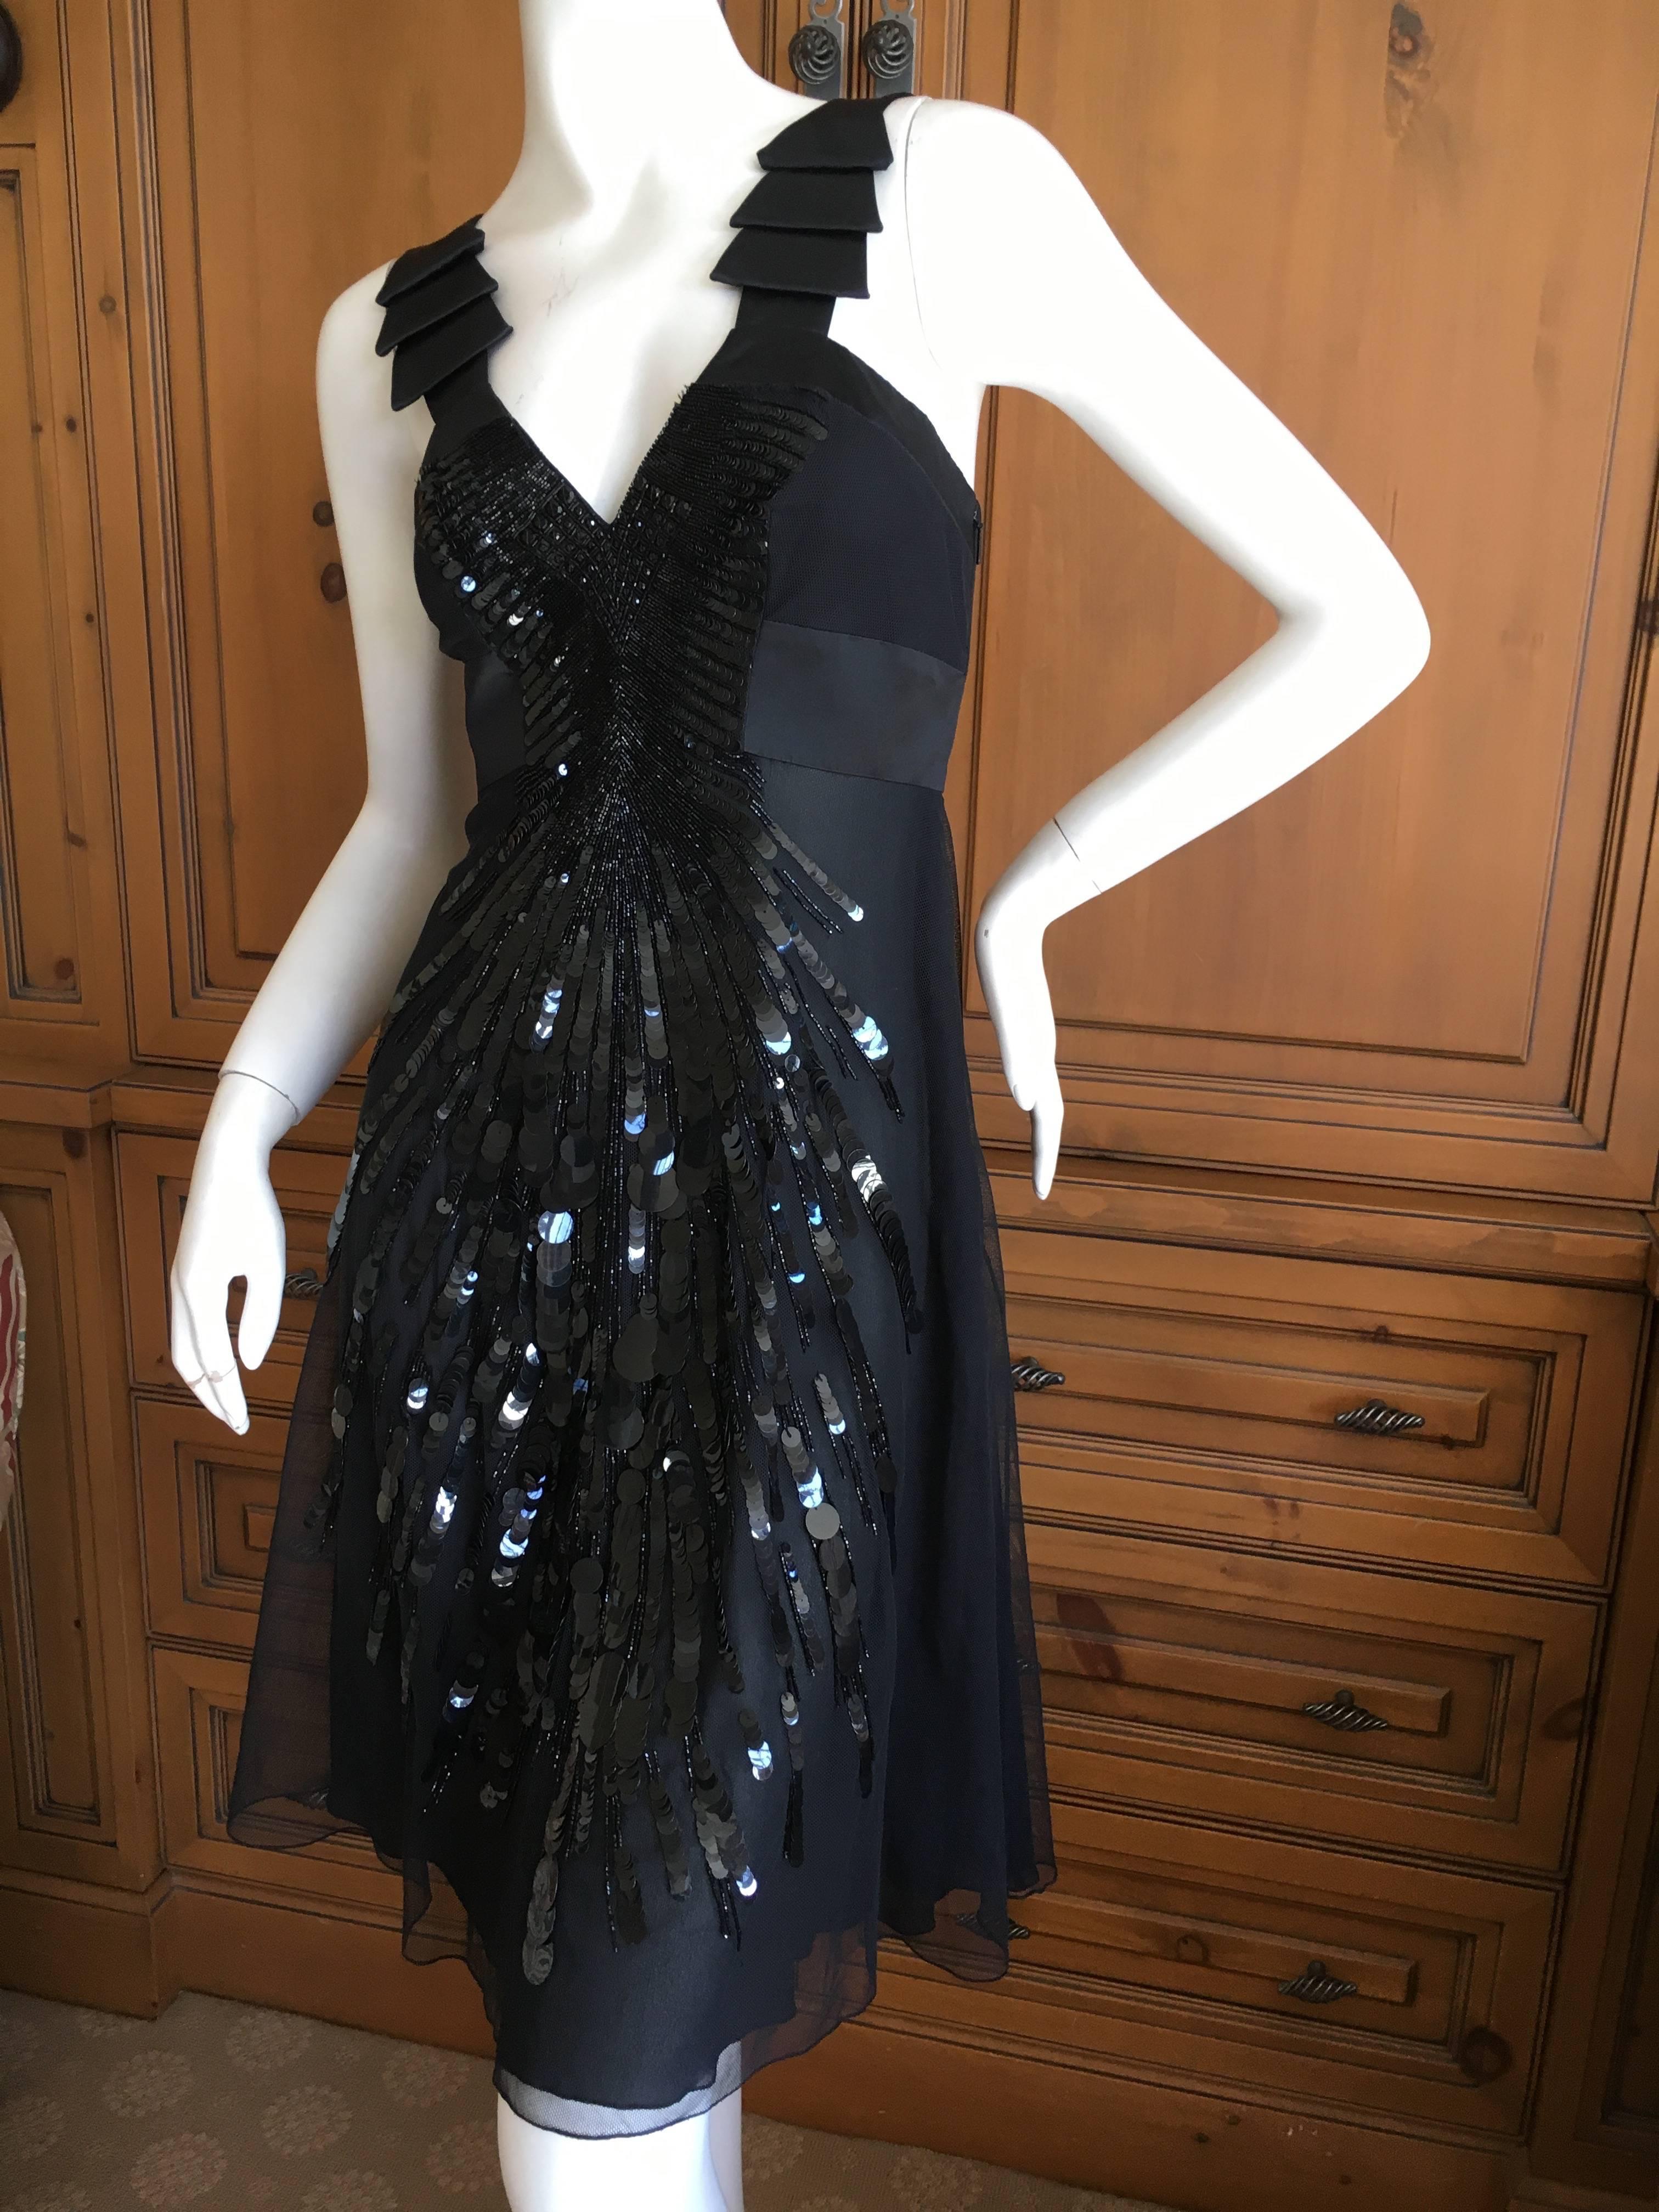 Versace Black Silk Sequined Cocktail Dress.
Bust 38